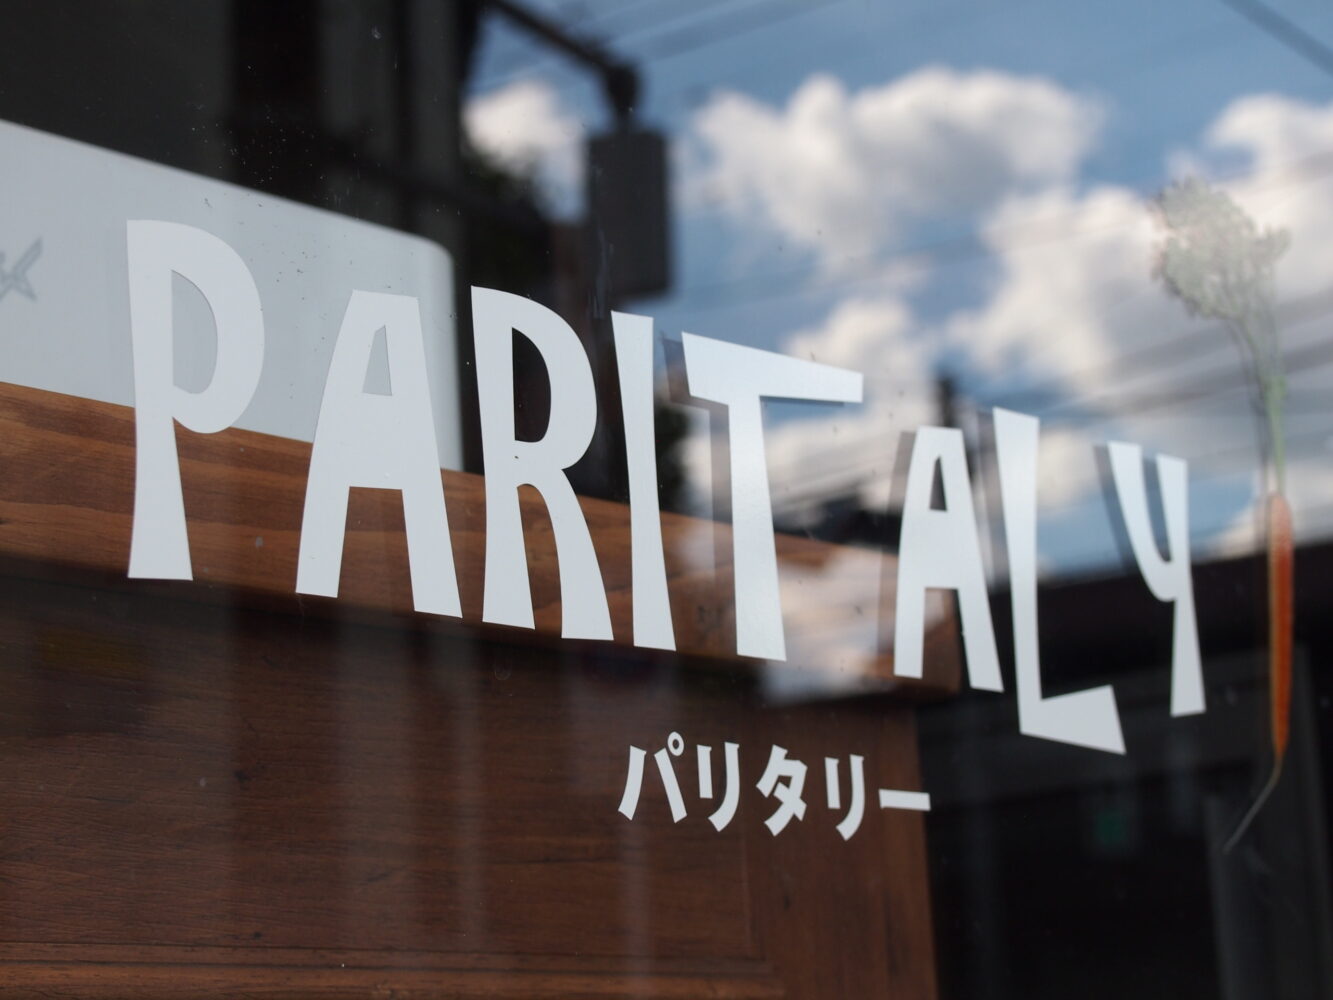 PARITALY-福菜屋-